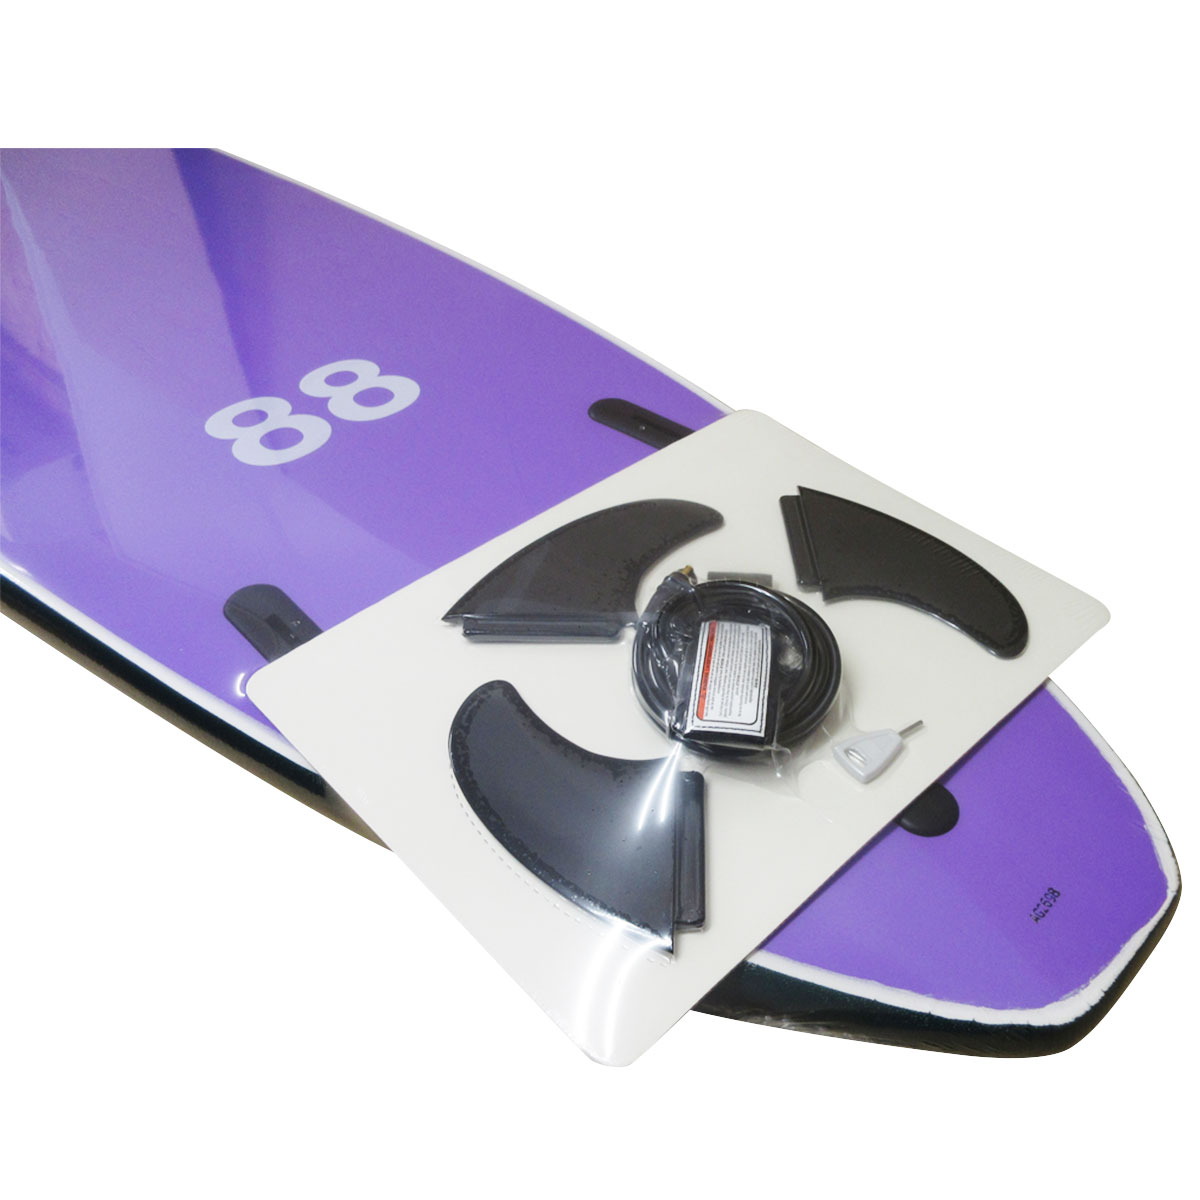 Thruster 8`0 Olive × Purple